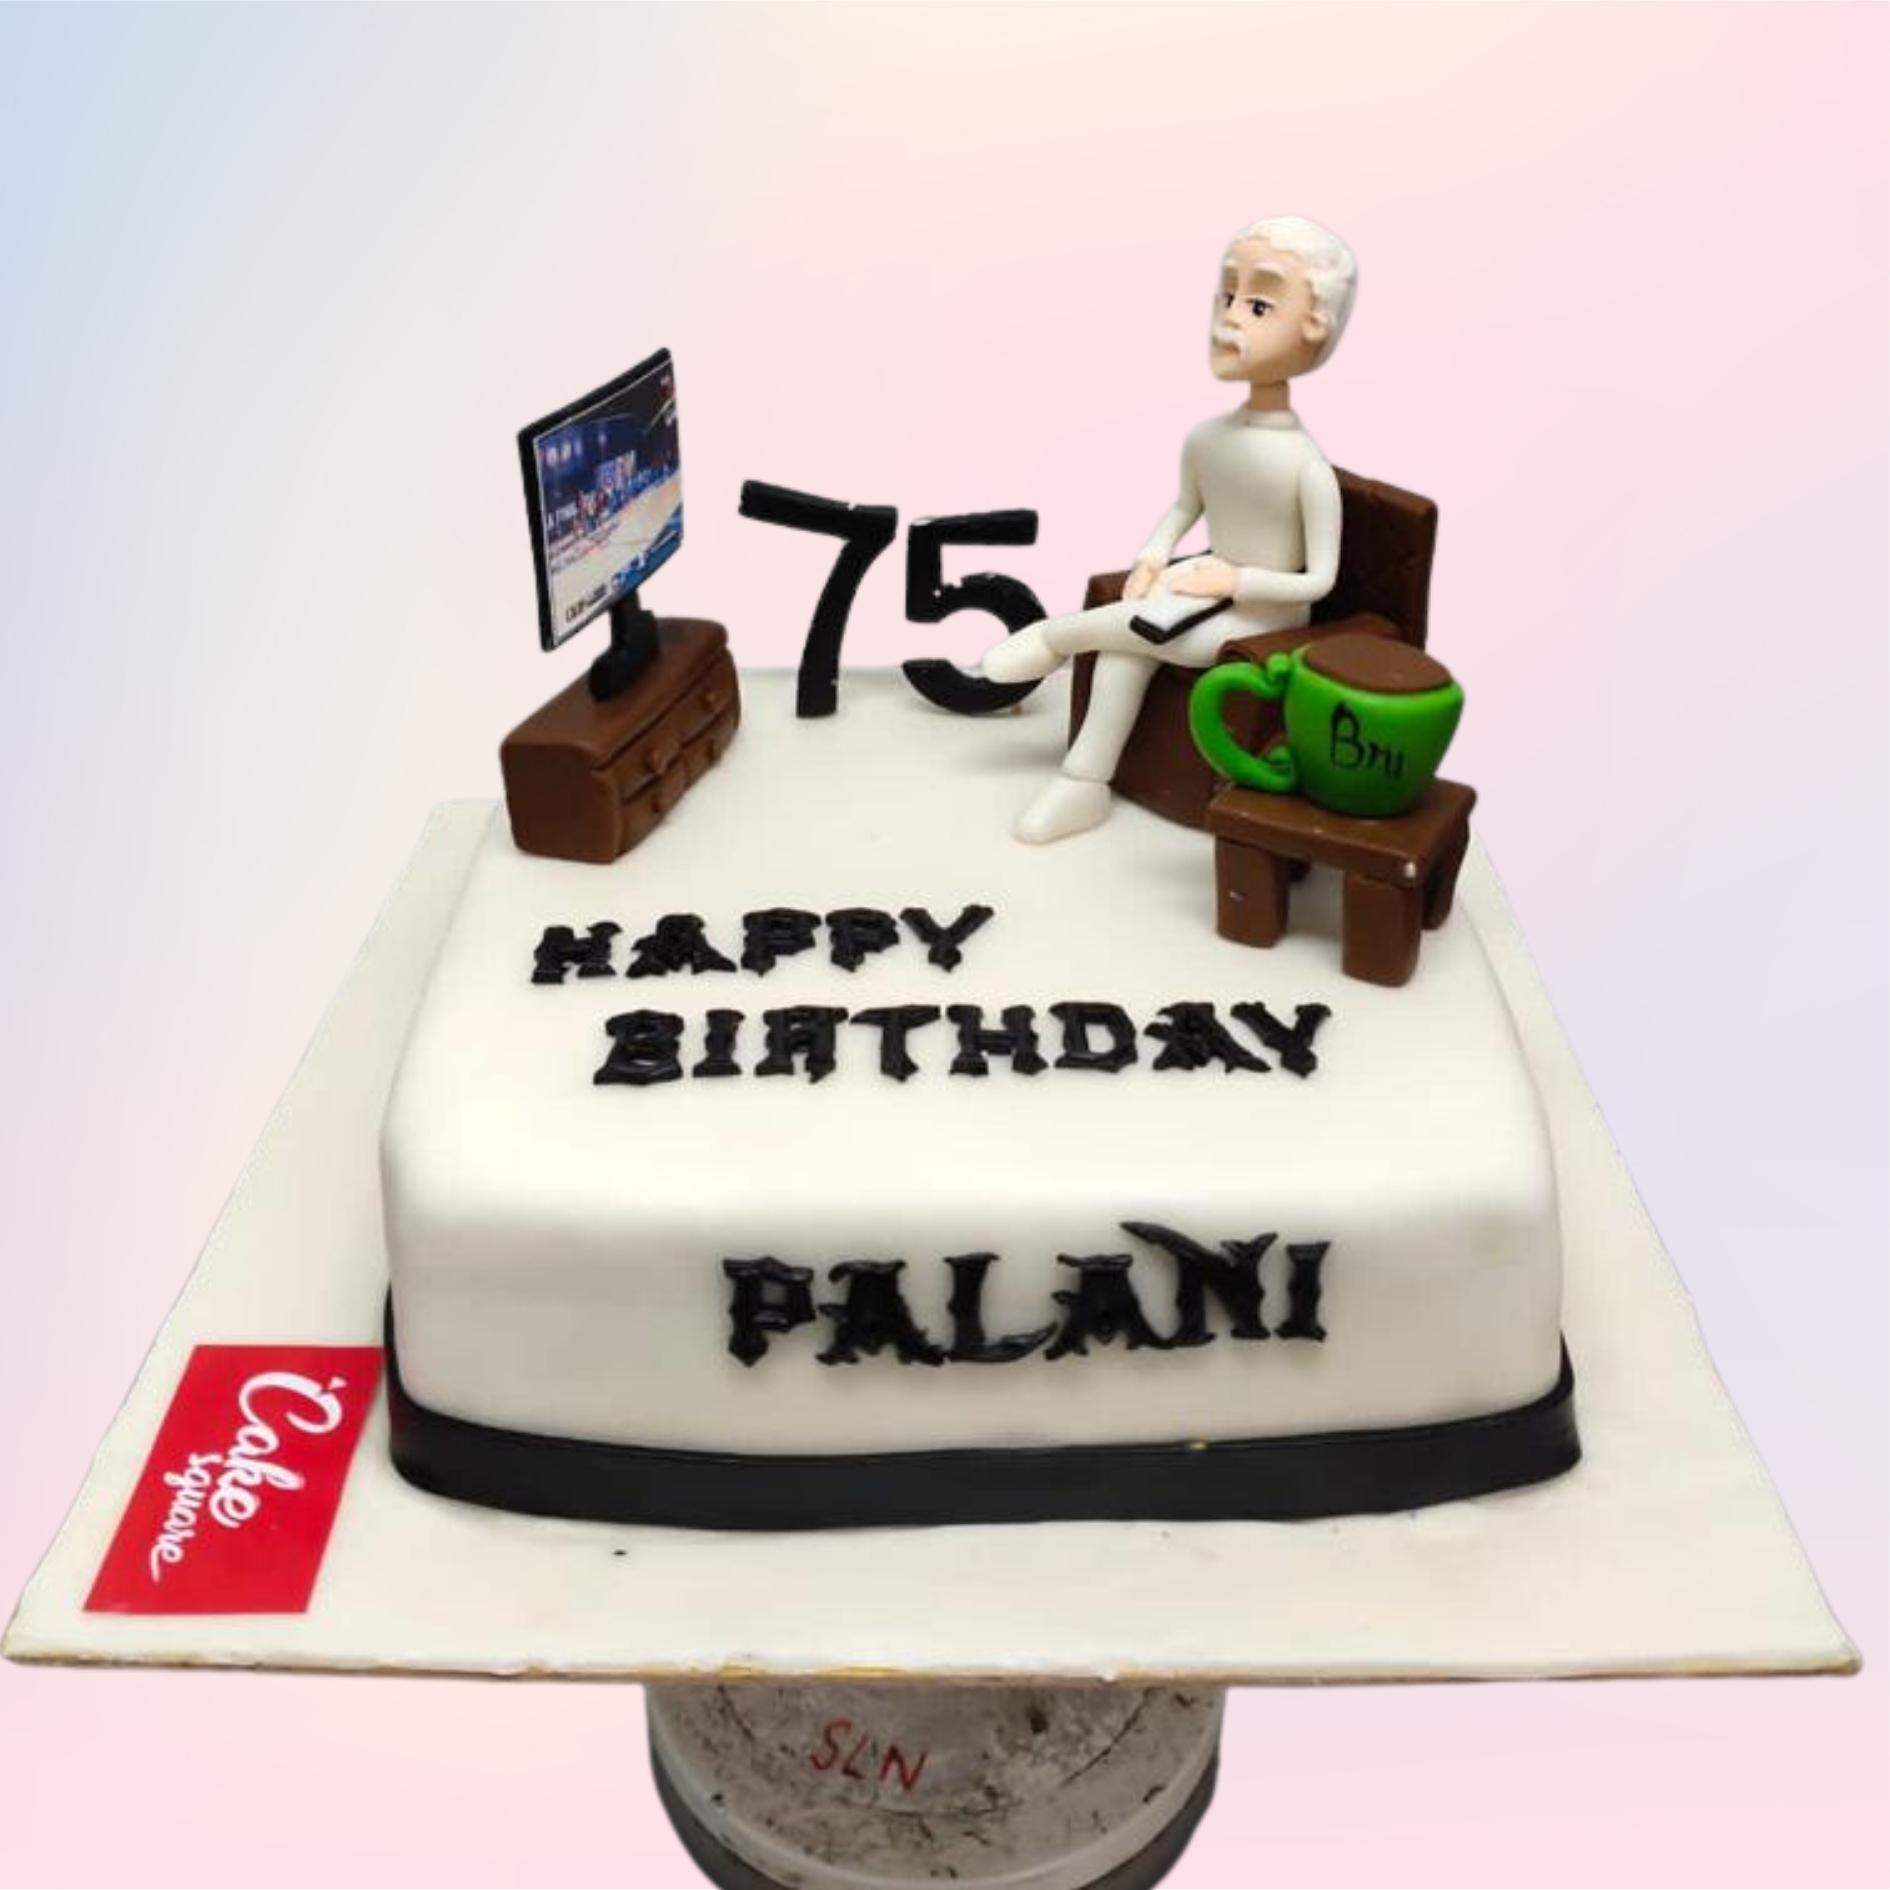 Aggregate 141+ 75th birthday cake man best - awesomeenglish.edu.vn